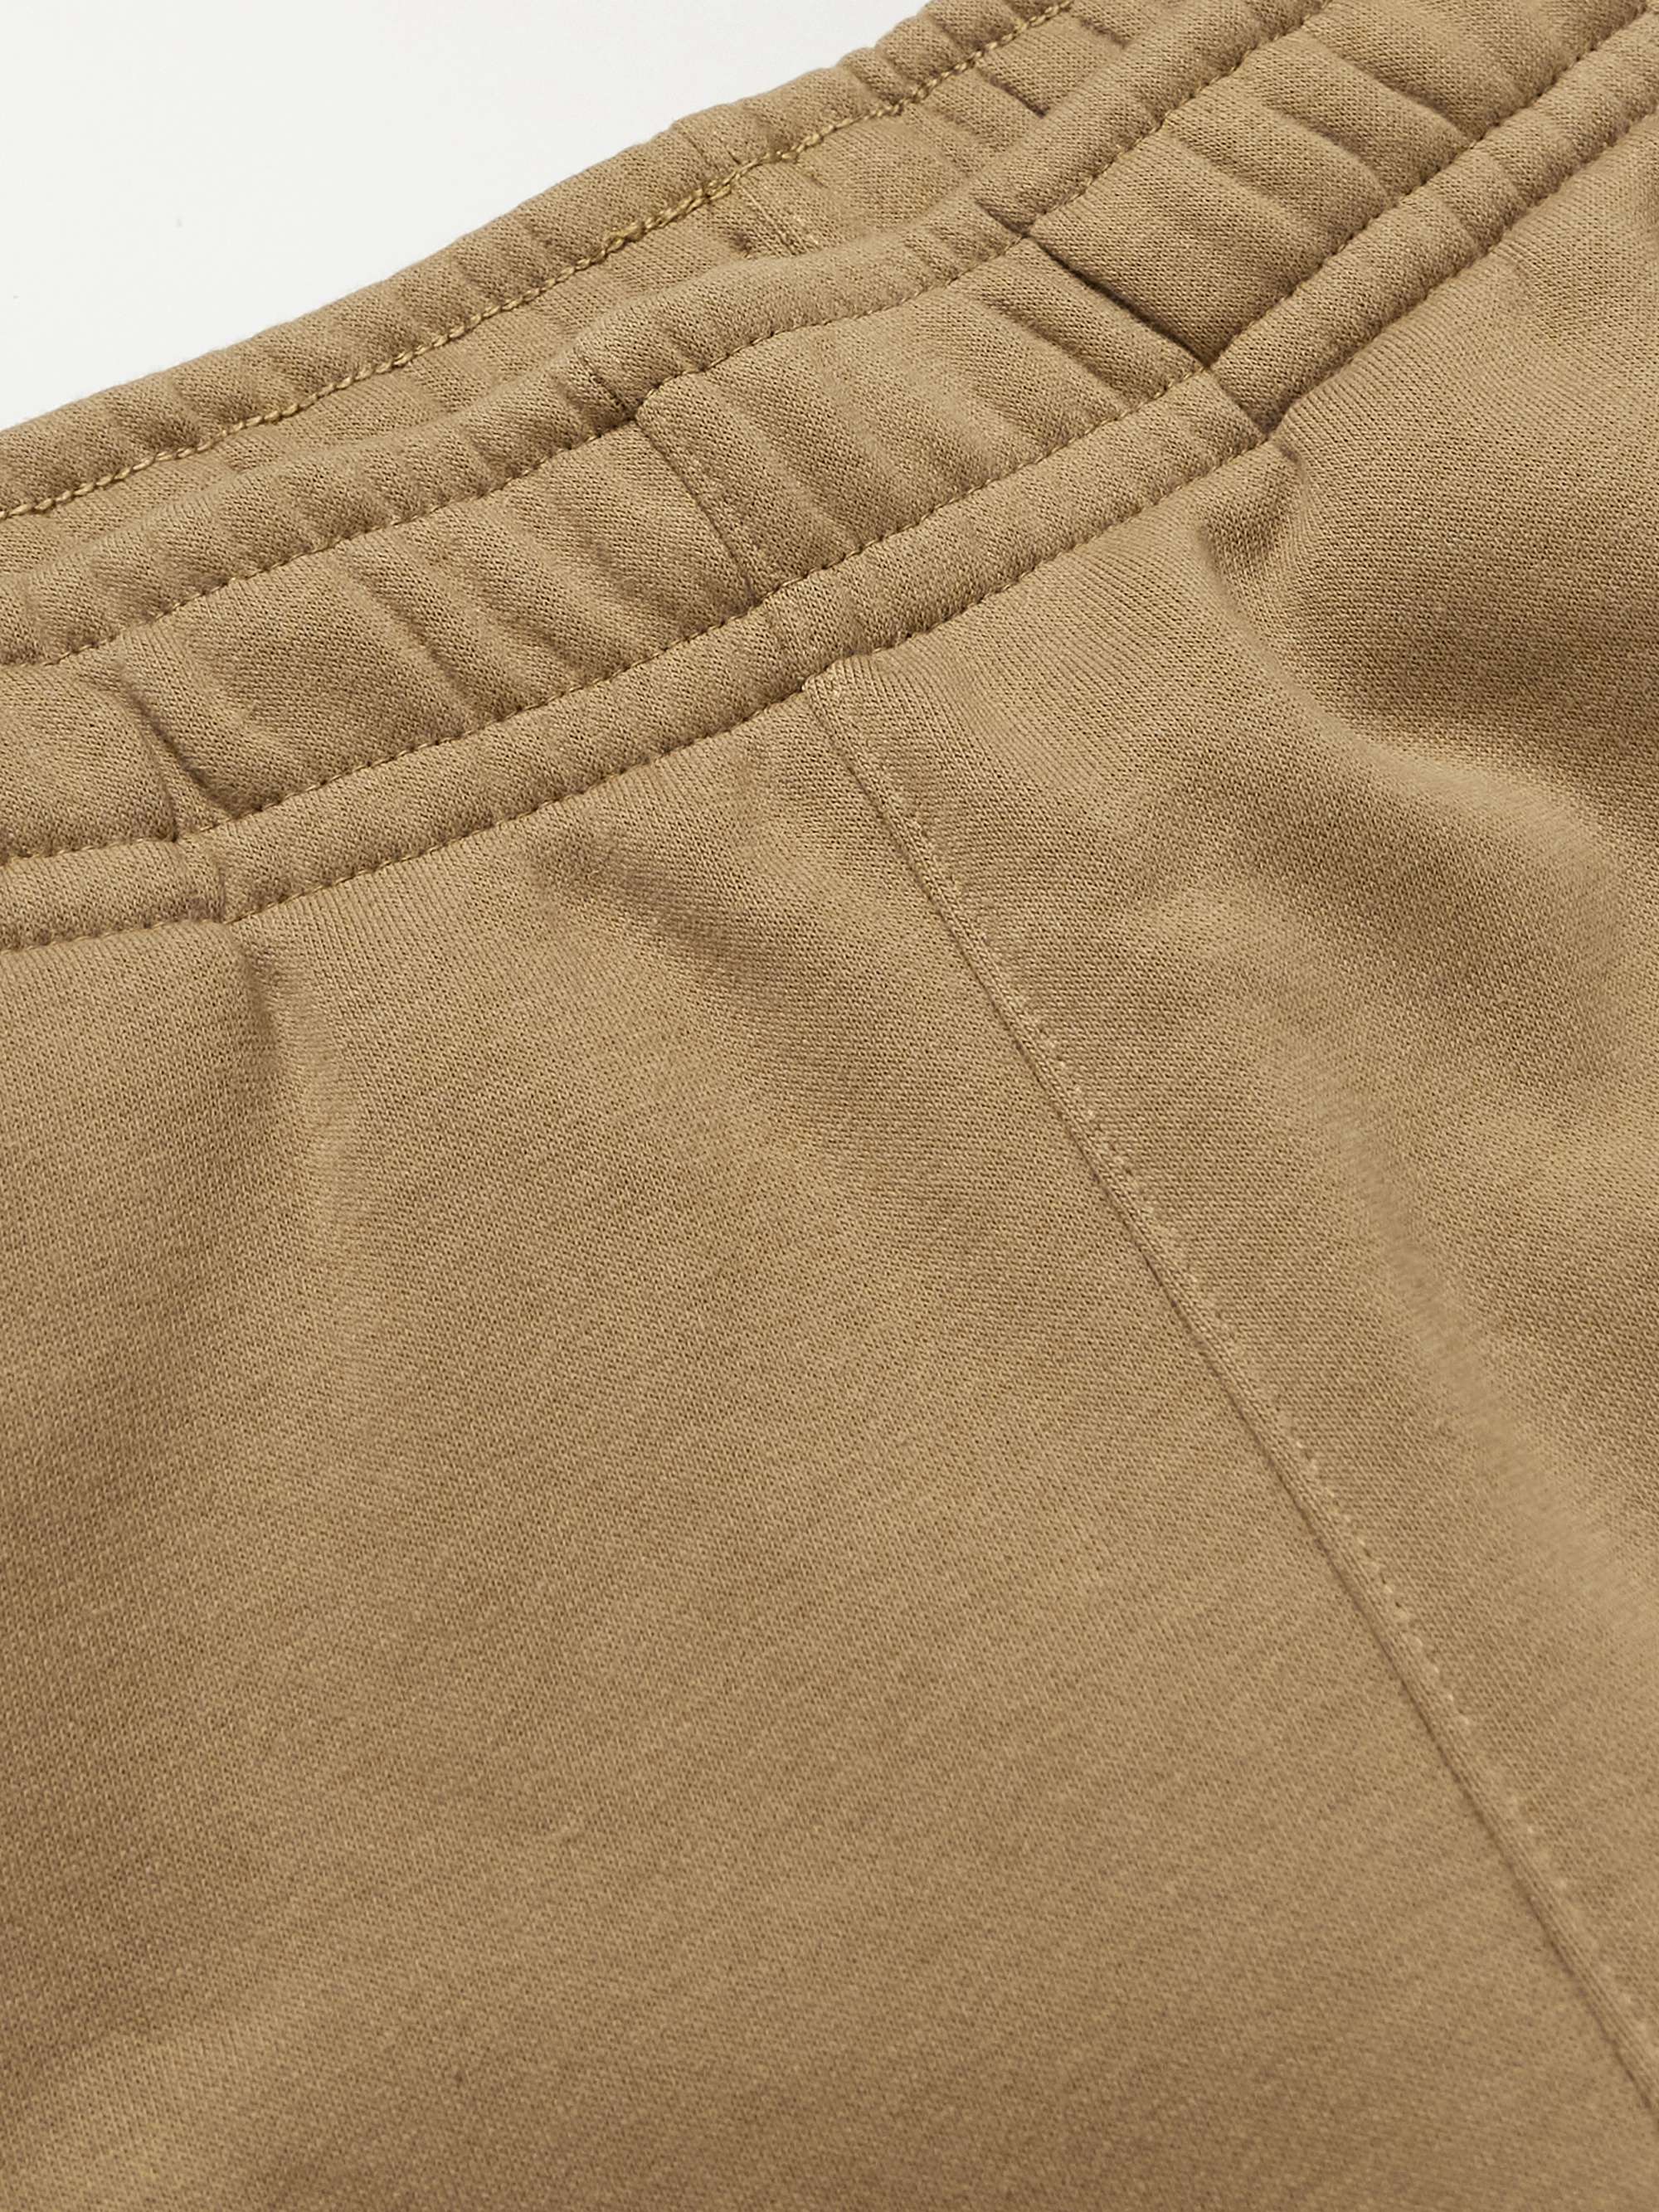 NIKE Sportswear Club Tapered Cotton-Blend Jersey Sweatpants